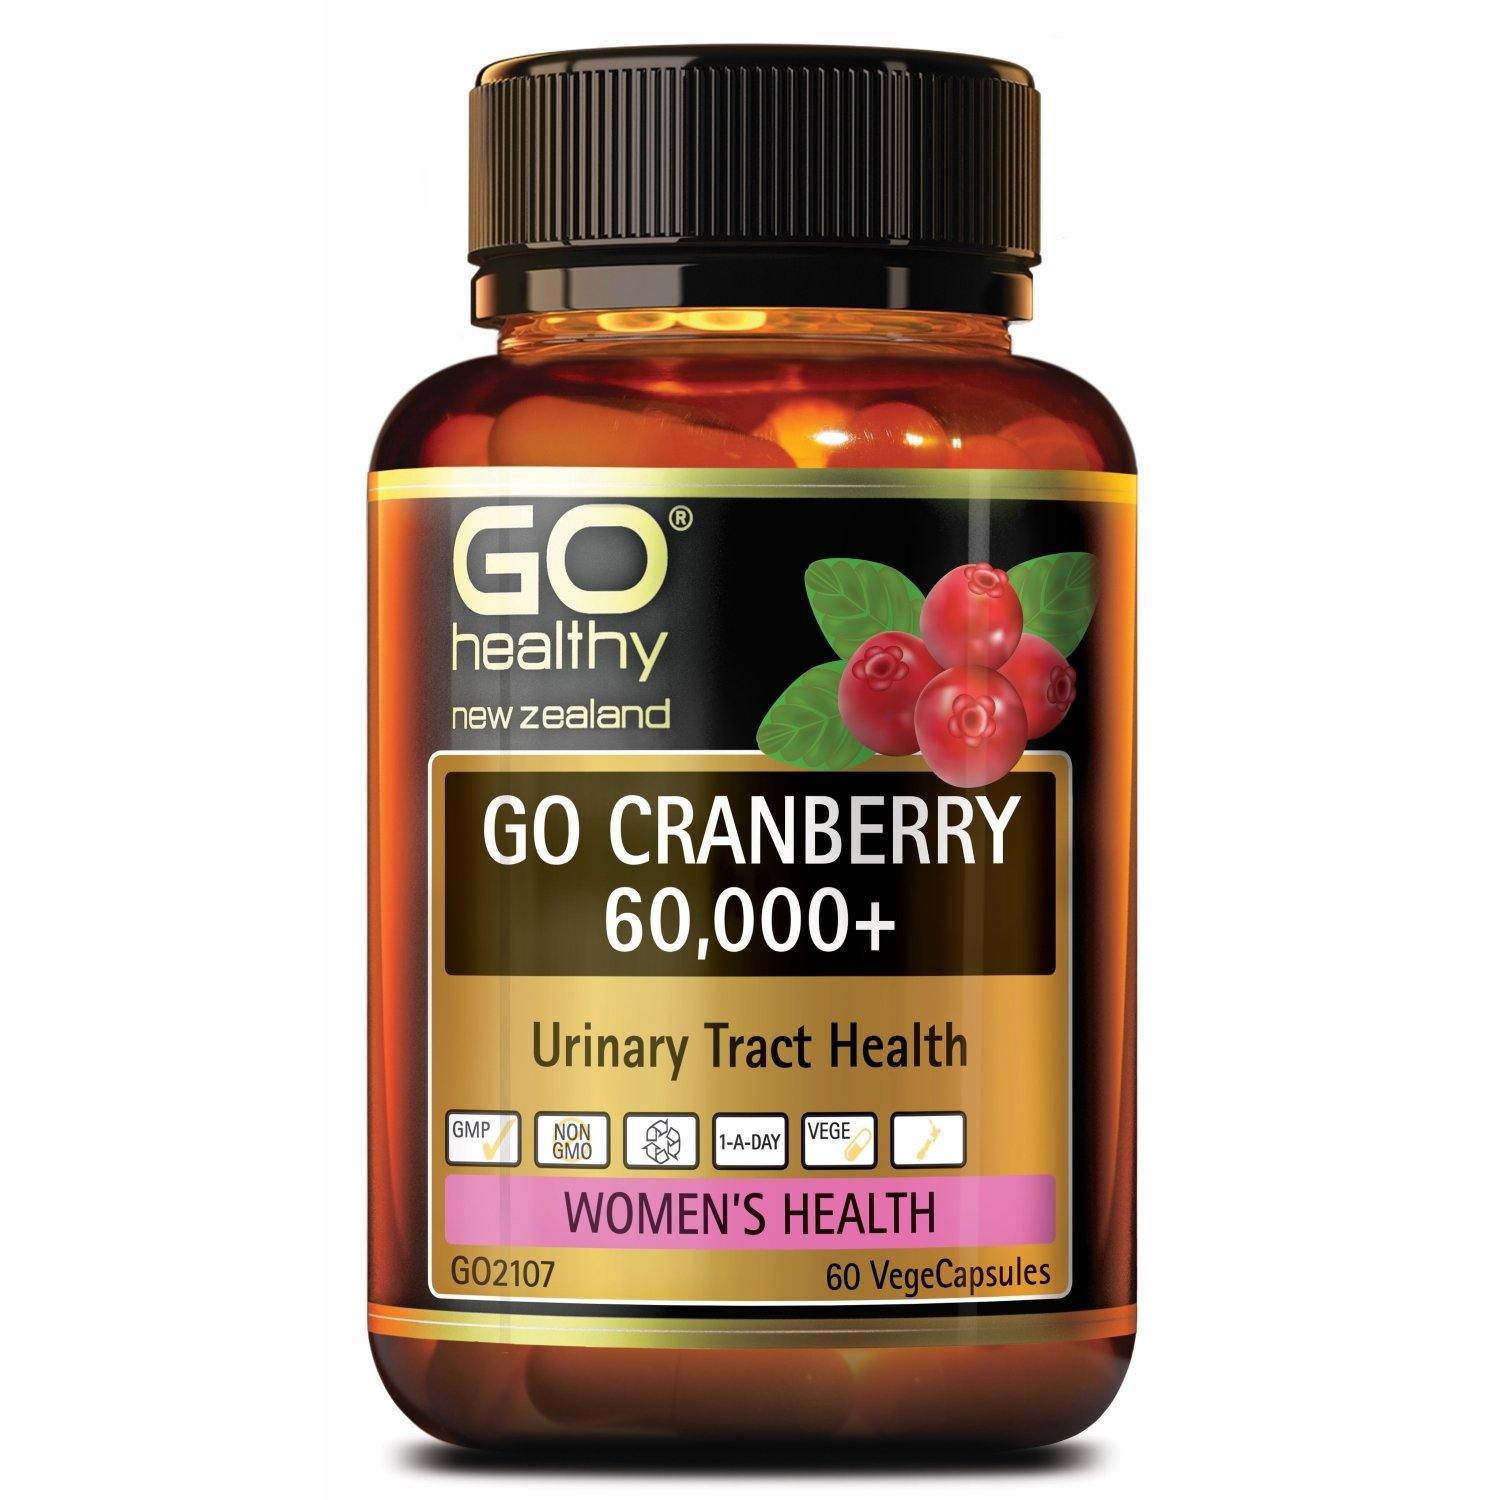 Buy 3 Get 1 Free - Go Healthy Cranberry 60,000+ 60 vege capsules - Ingredient: Cranberry, Ingredient: Olive Leaf, Ingredient: Vitamin C, Ingredient: Zinc Citrate, nz made, Price  $50-$150, Specials, Vendor  Go Healthy - Aotea Wellness